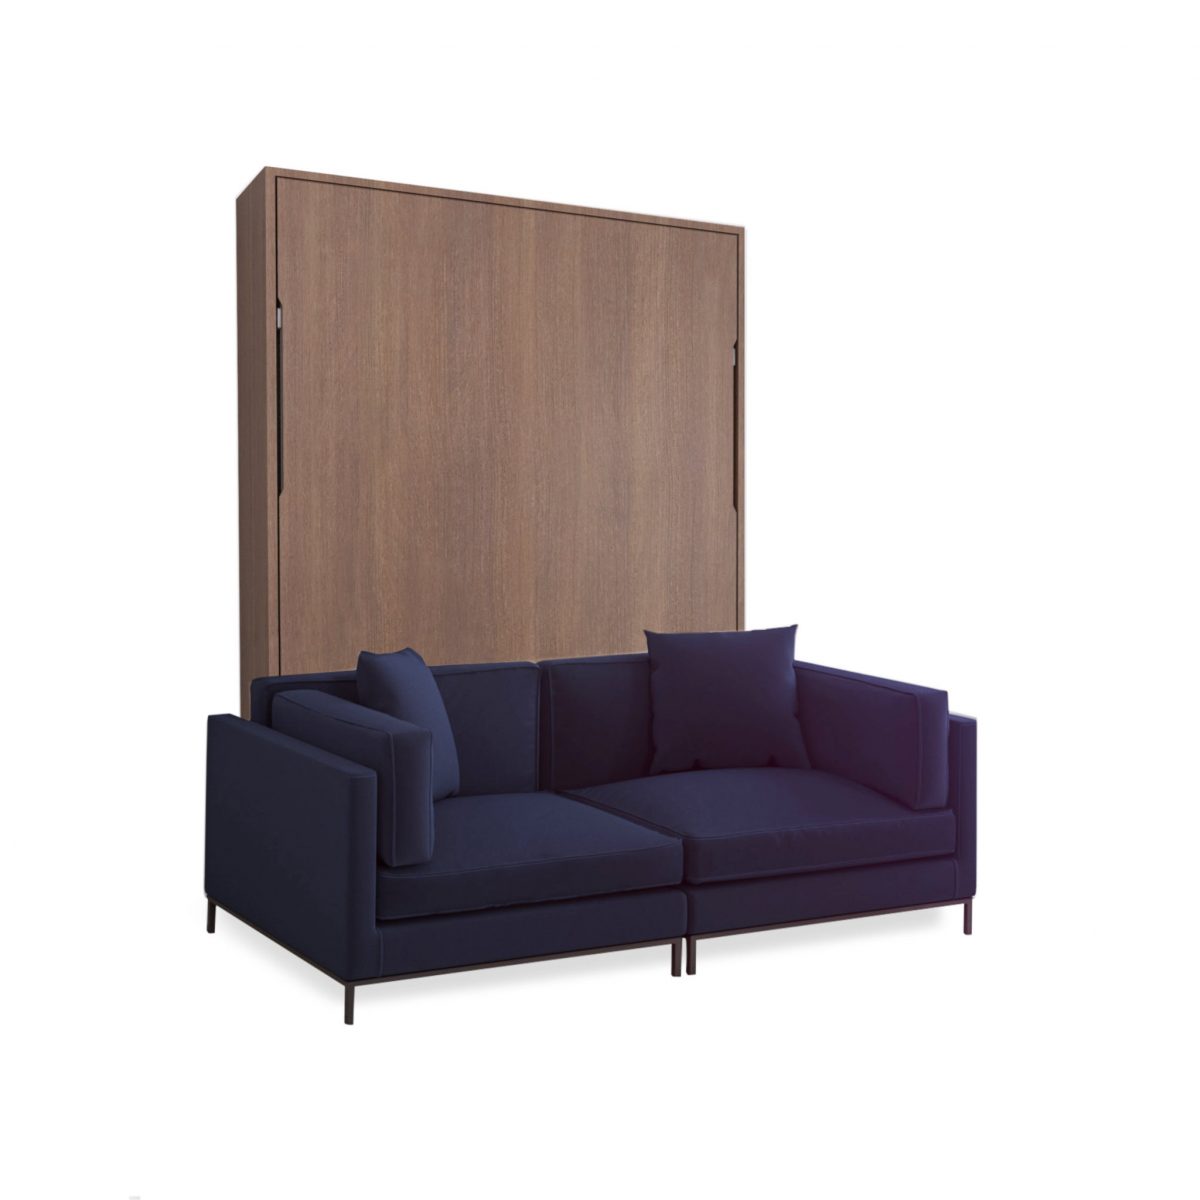 MurphySofa Migliore: 2 Seat sofa in Fabric | Expand Furniture - Folding